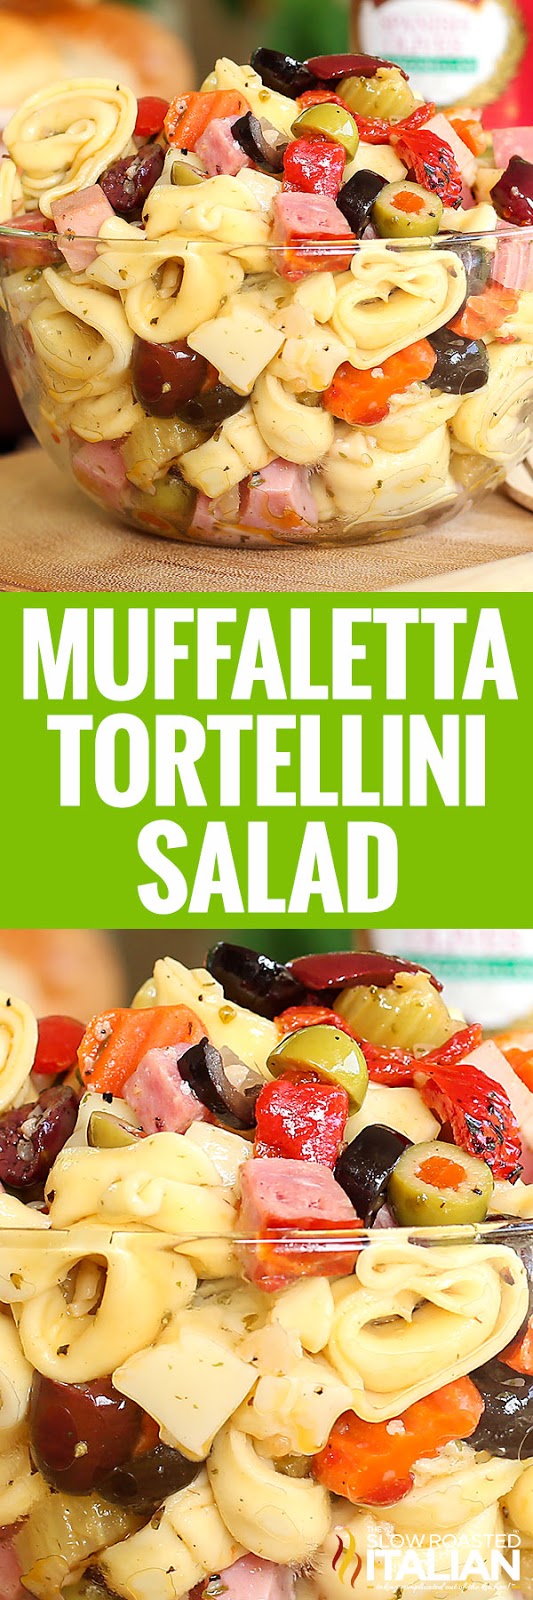 Muffaletta Tortellini Salad Recipe – Home Inspiration and DIY Crafts Ideas